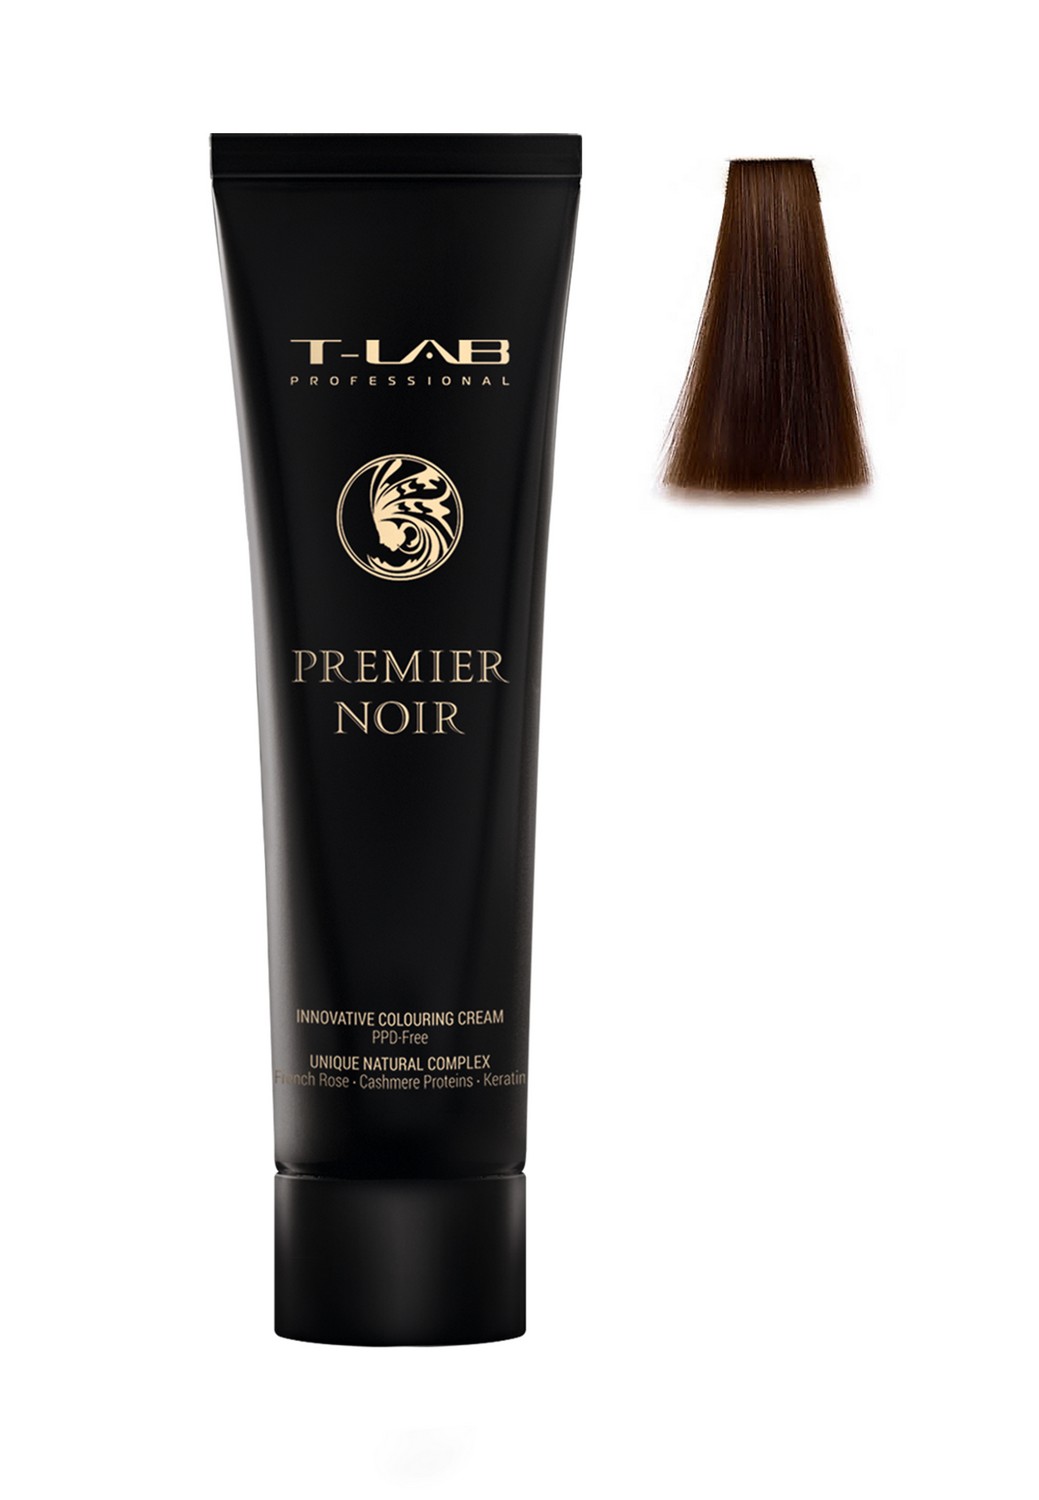 Крем-фарба T-LAB Professional Premier Noir colouring cream, відтінок 6.32 (dark golden iridescent blonde) - фото 2